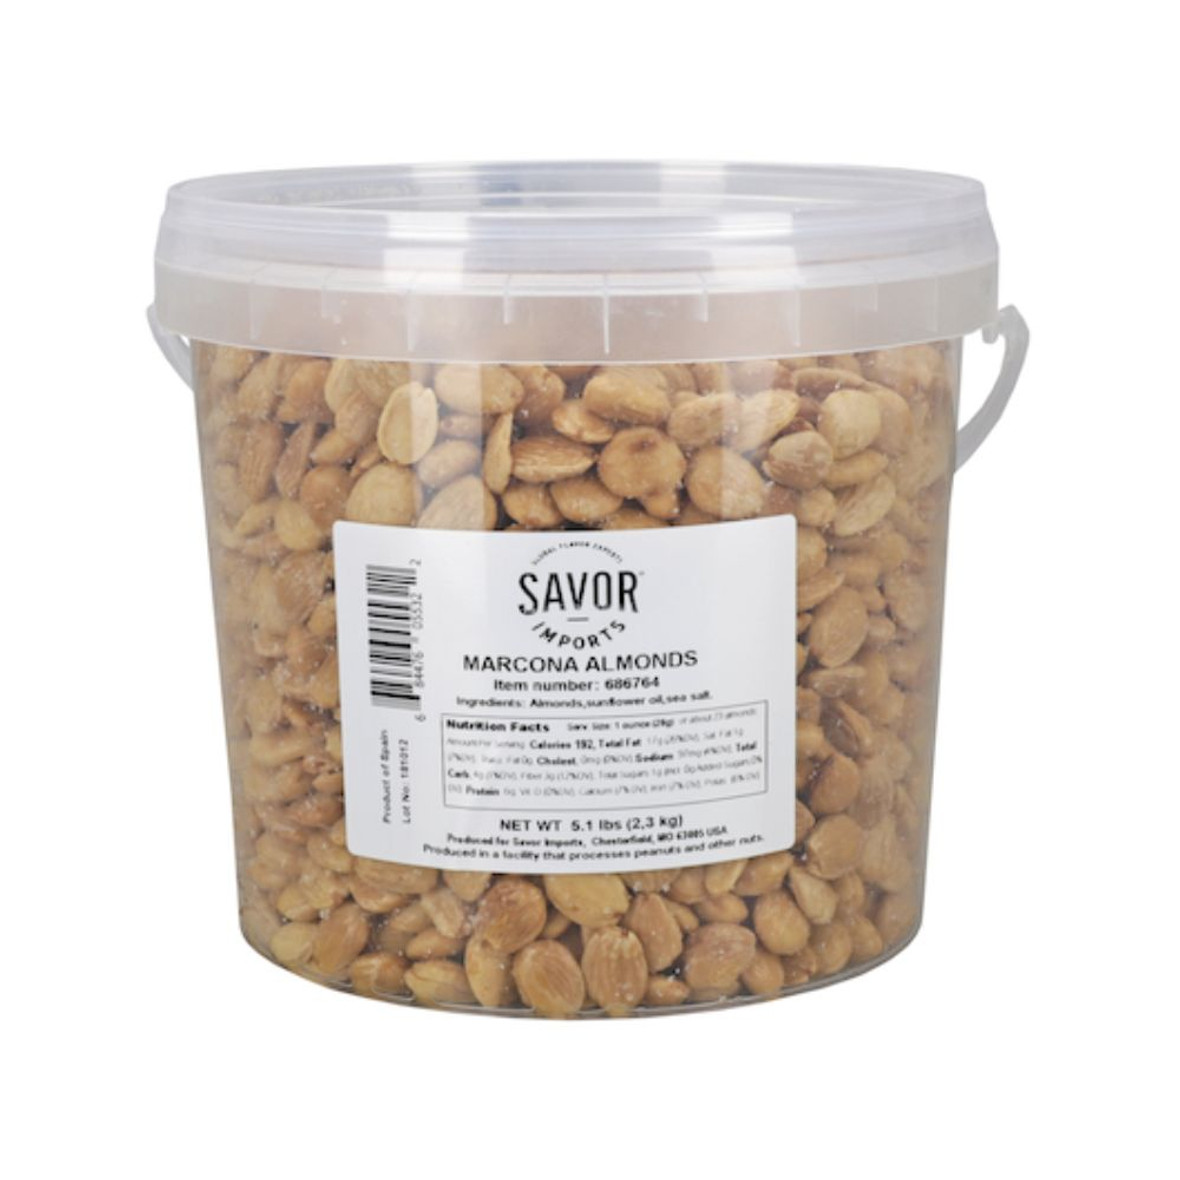 Savor Imports Fried & Salted Marcona Almond, 5 Pound